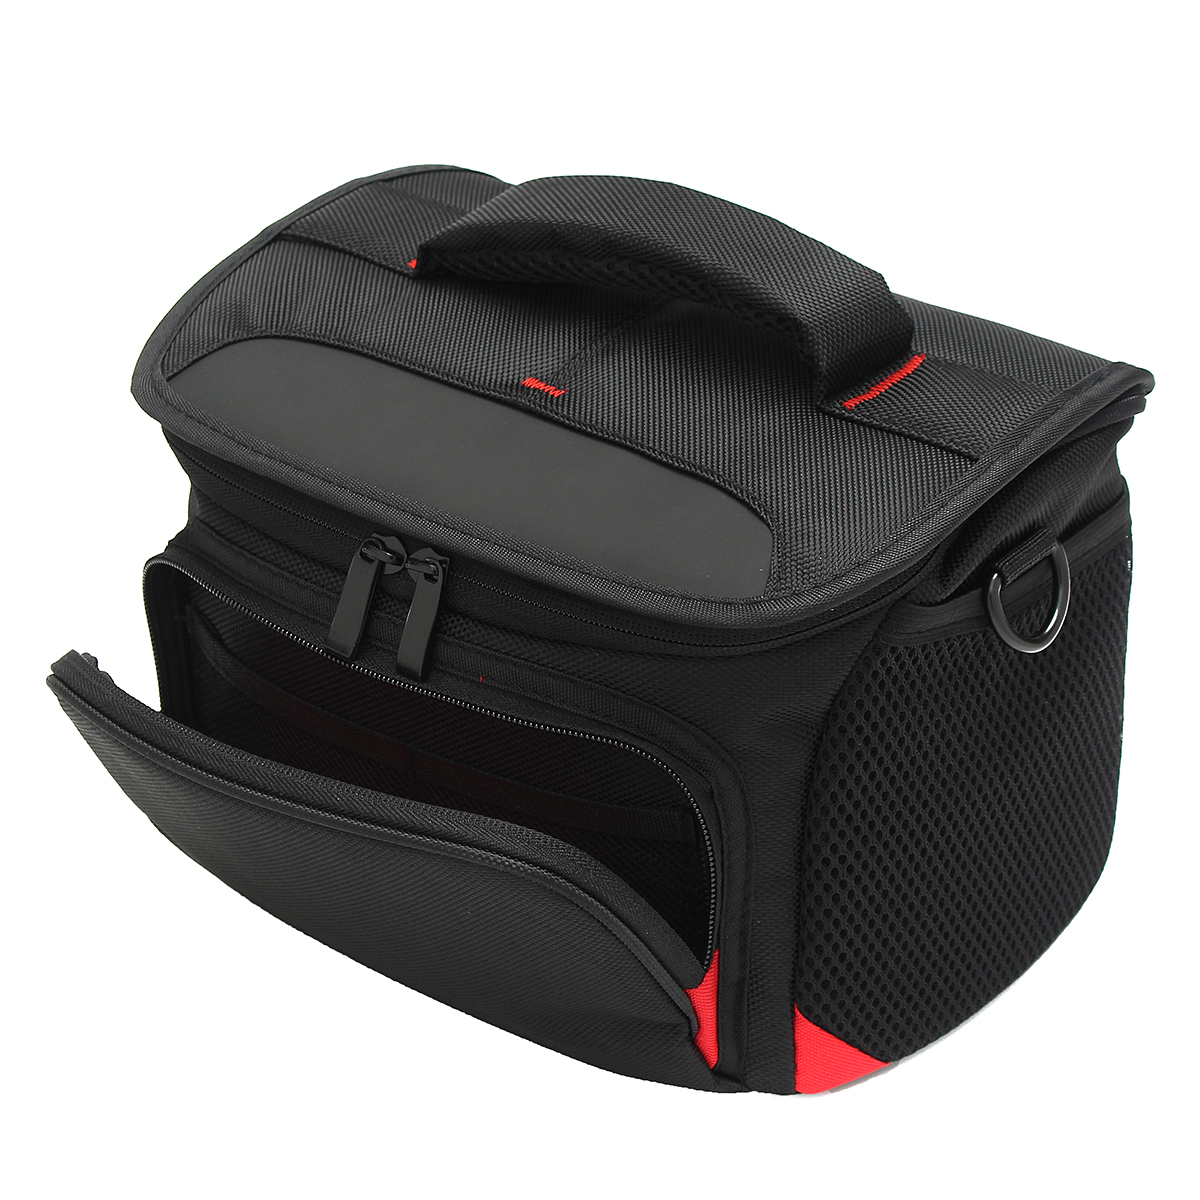 Waterproof-Camera-Shoulder-Bag-Travel-Carrying-Case-with-Rain-Cover-For-DSLR-SLR-Camera-Flash-Lens-1633799-3